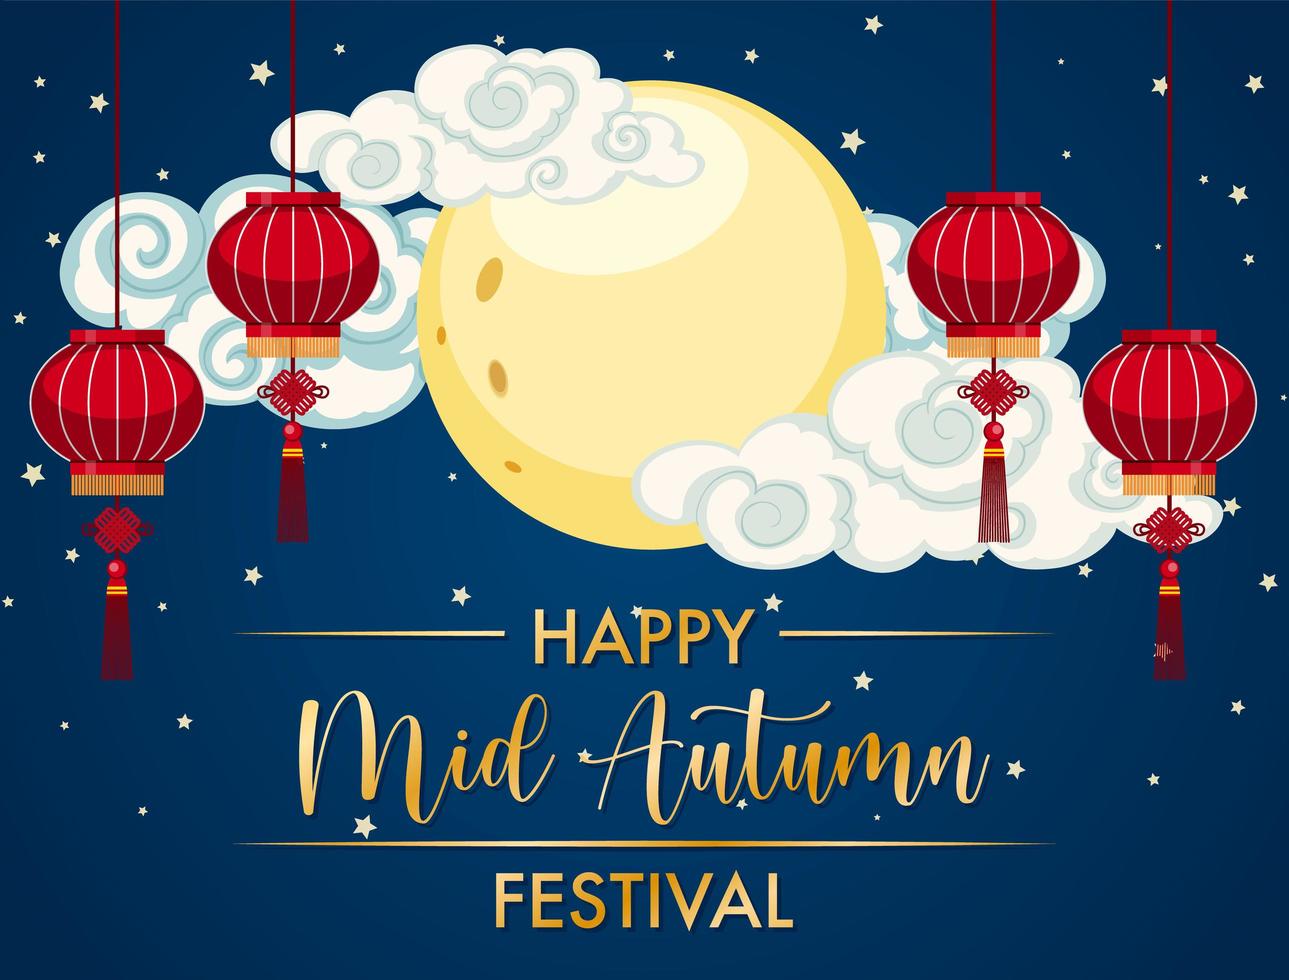 chinees medio herfst festival achtergrond vector